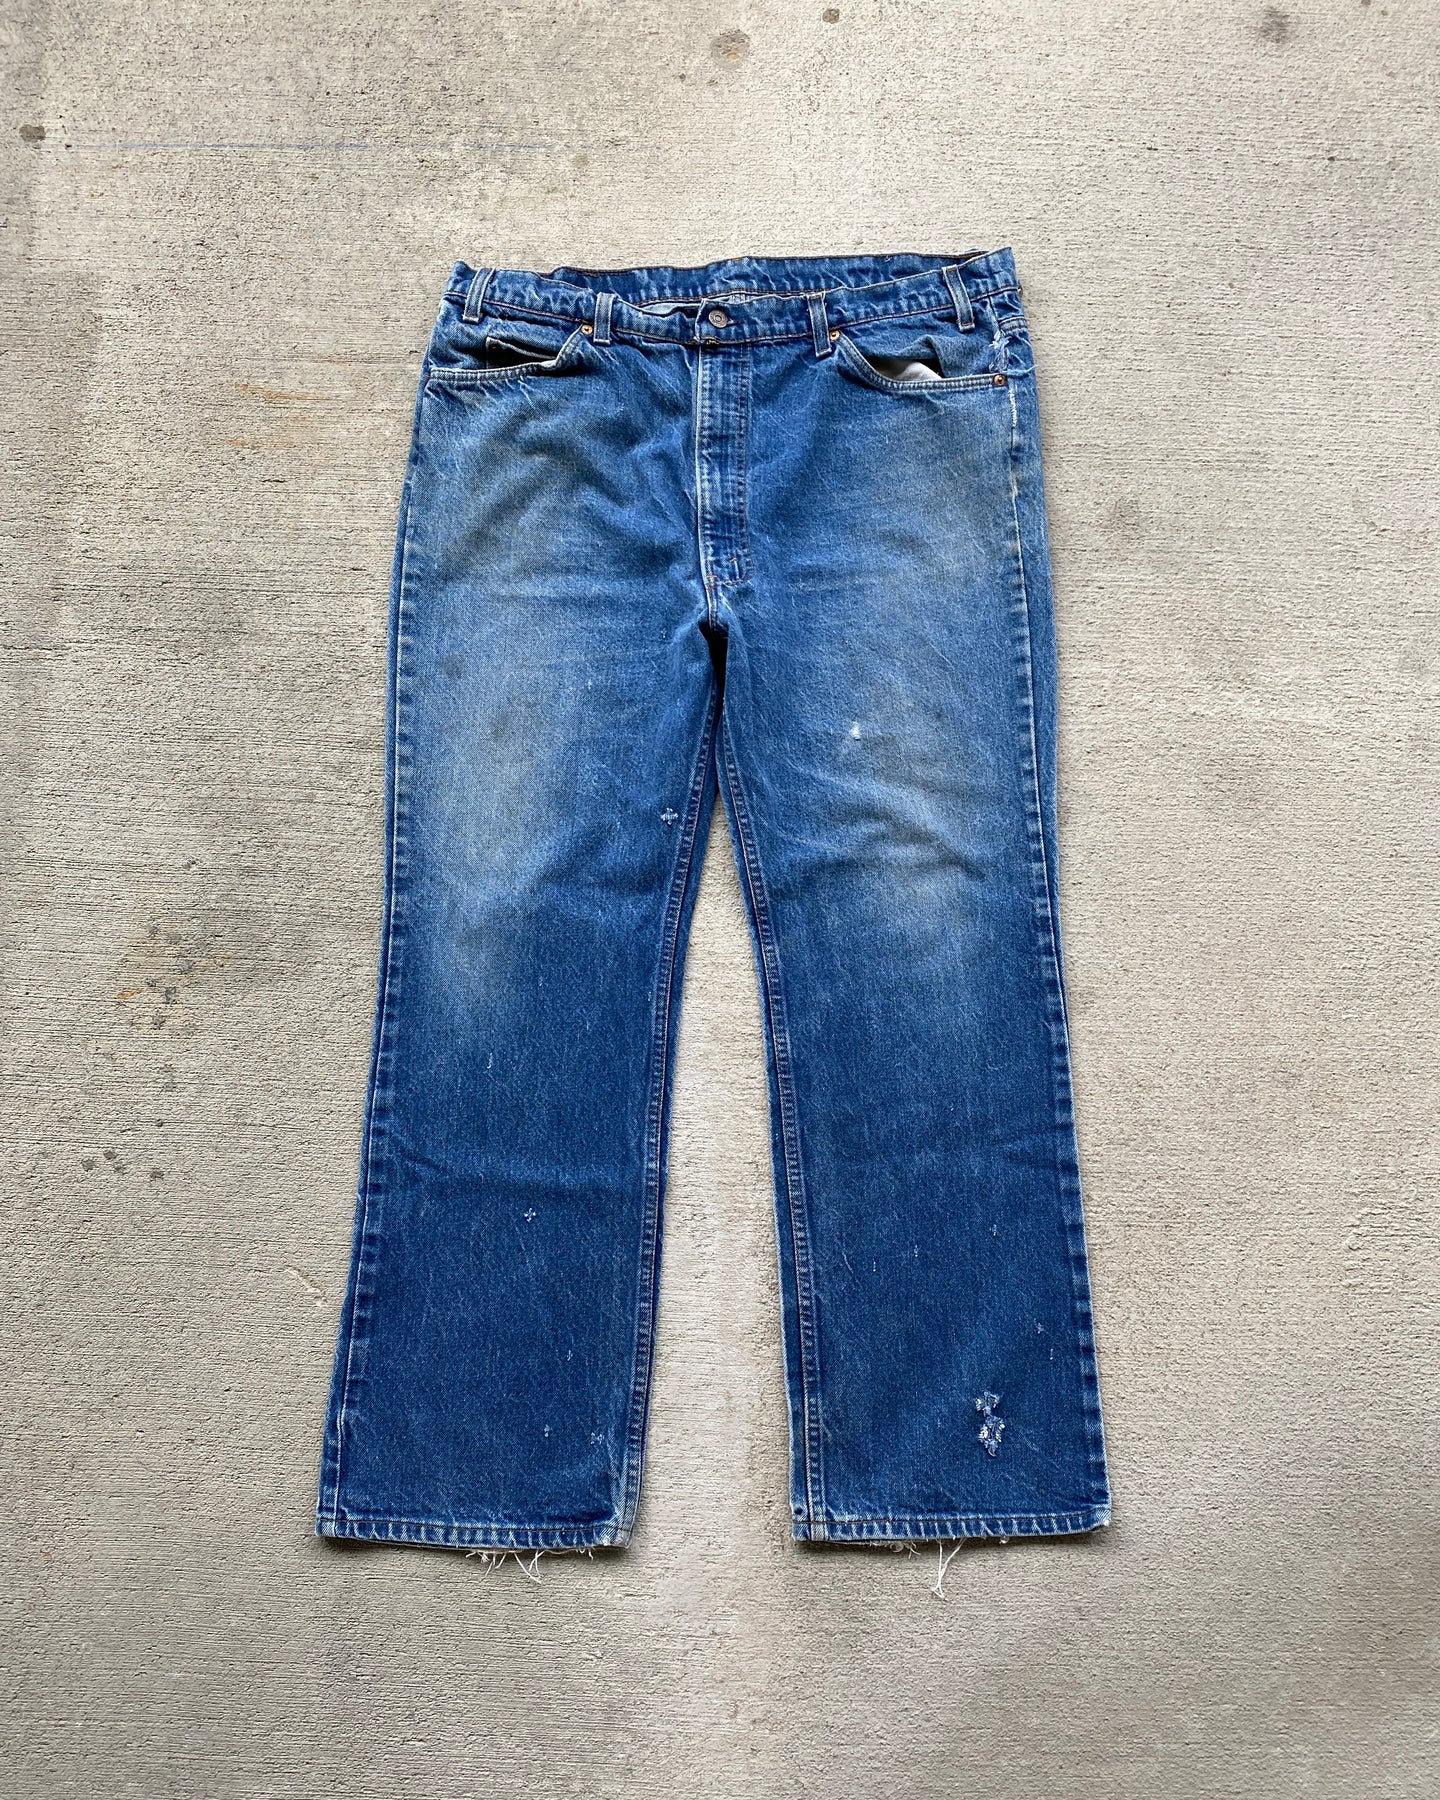 1980s 517 Orange Tab Jeans - Size 40 x 29